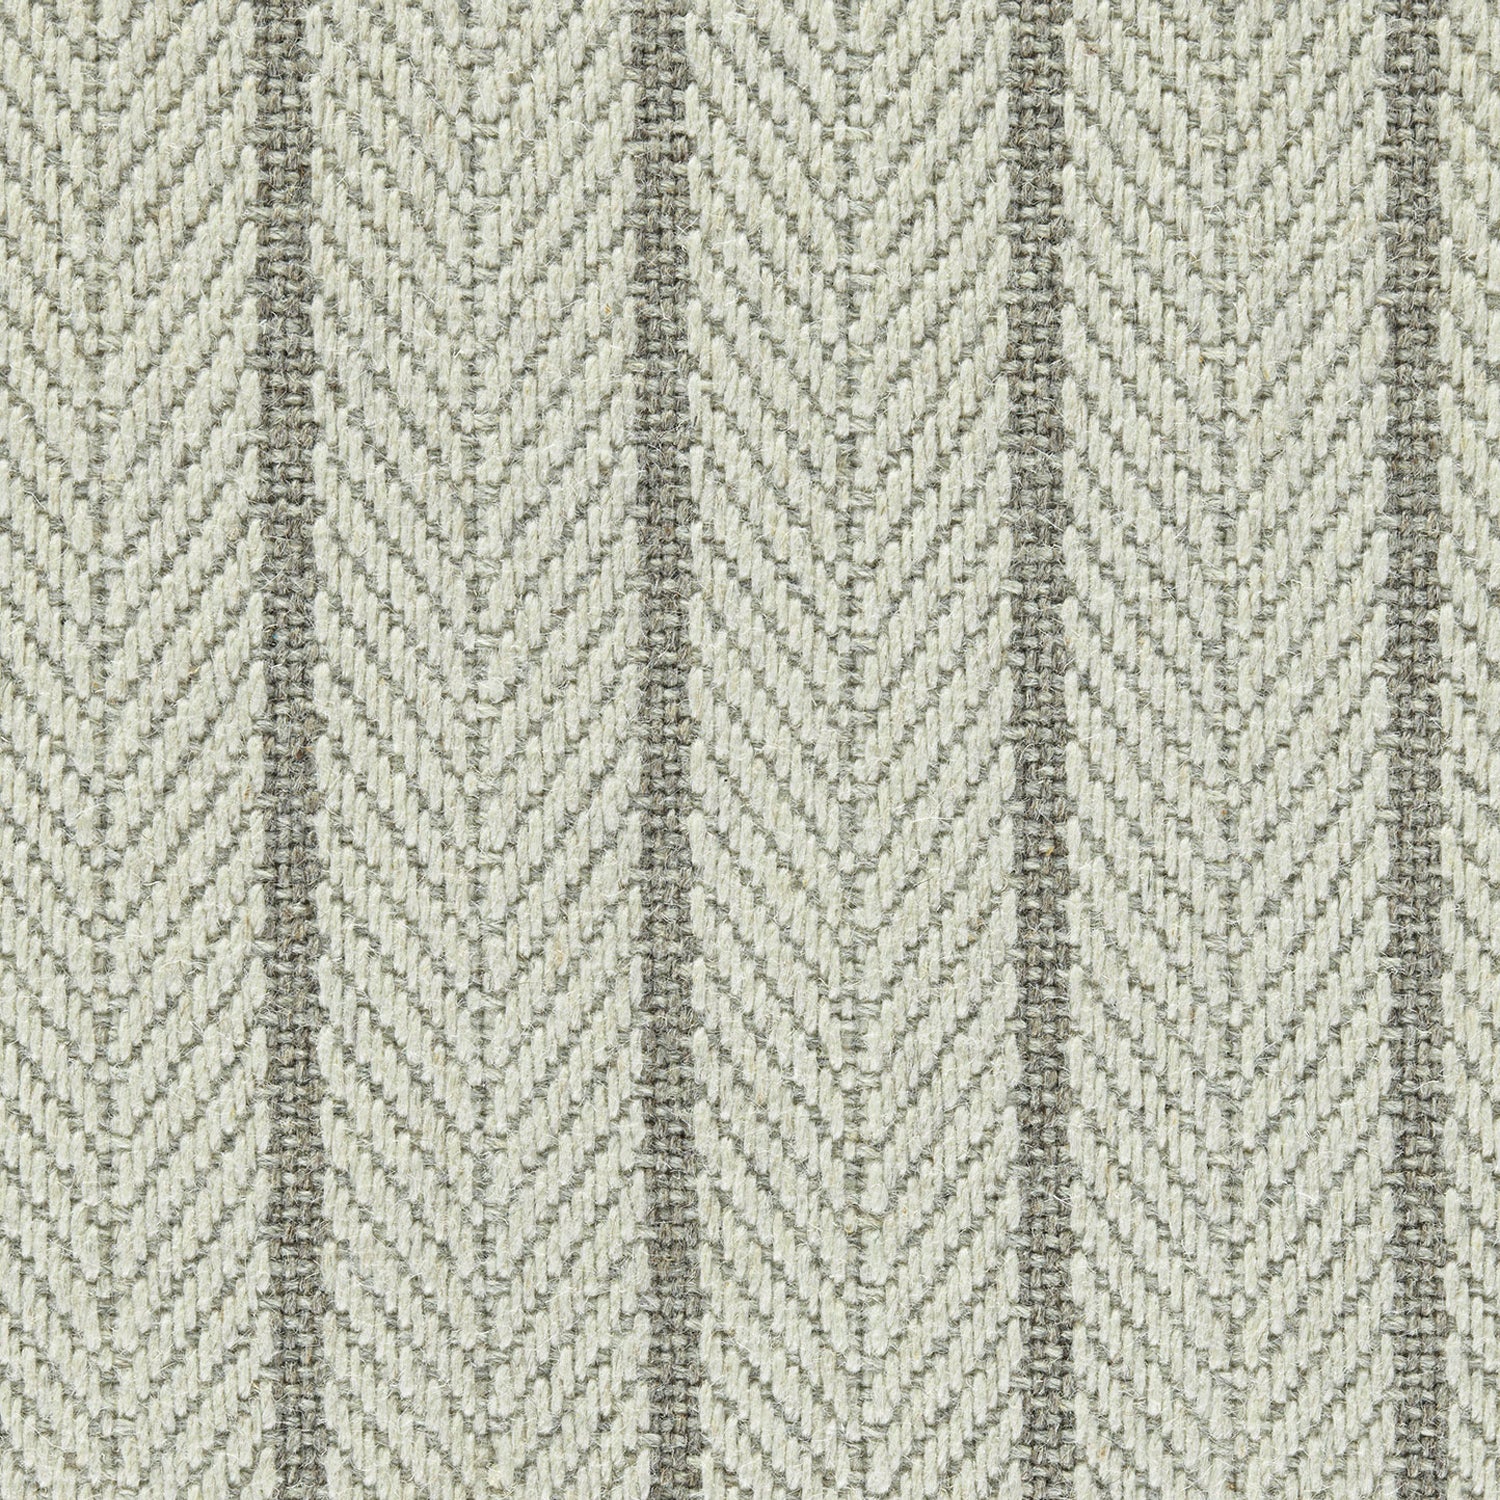 Wool broadloom carpet swatch in a striped herringbone weave in cream and taupe.